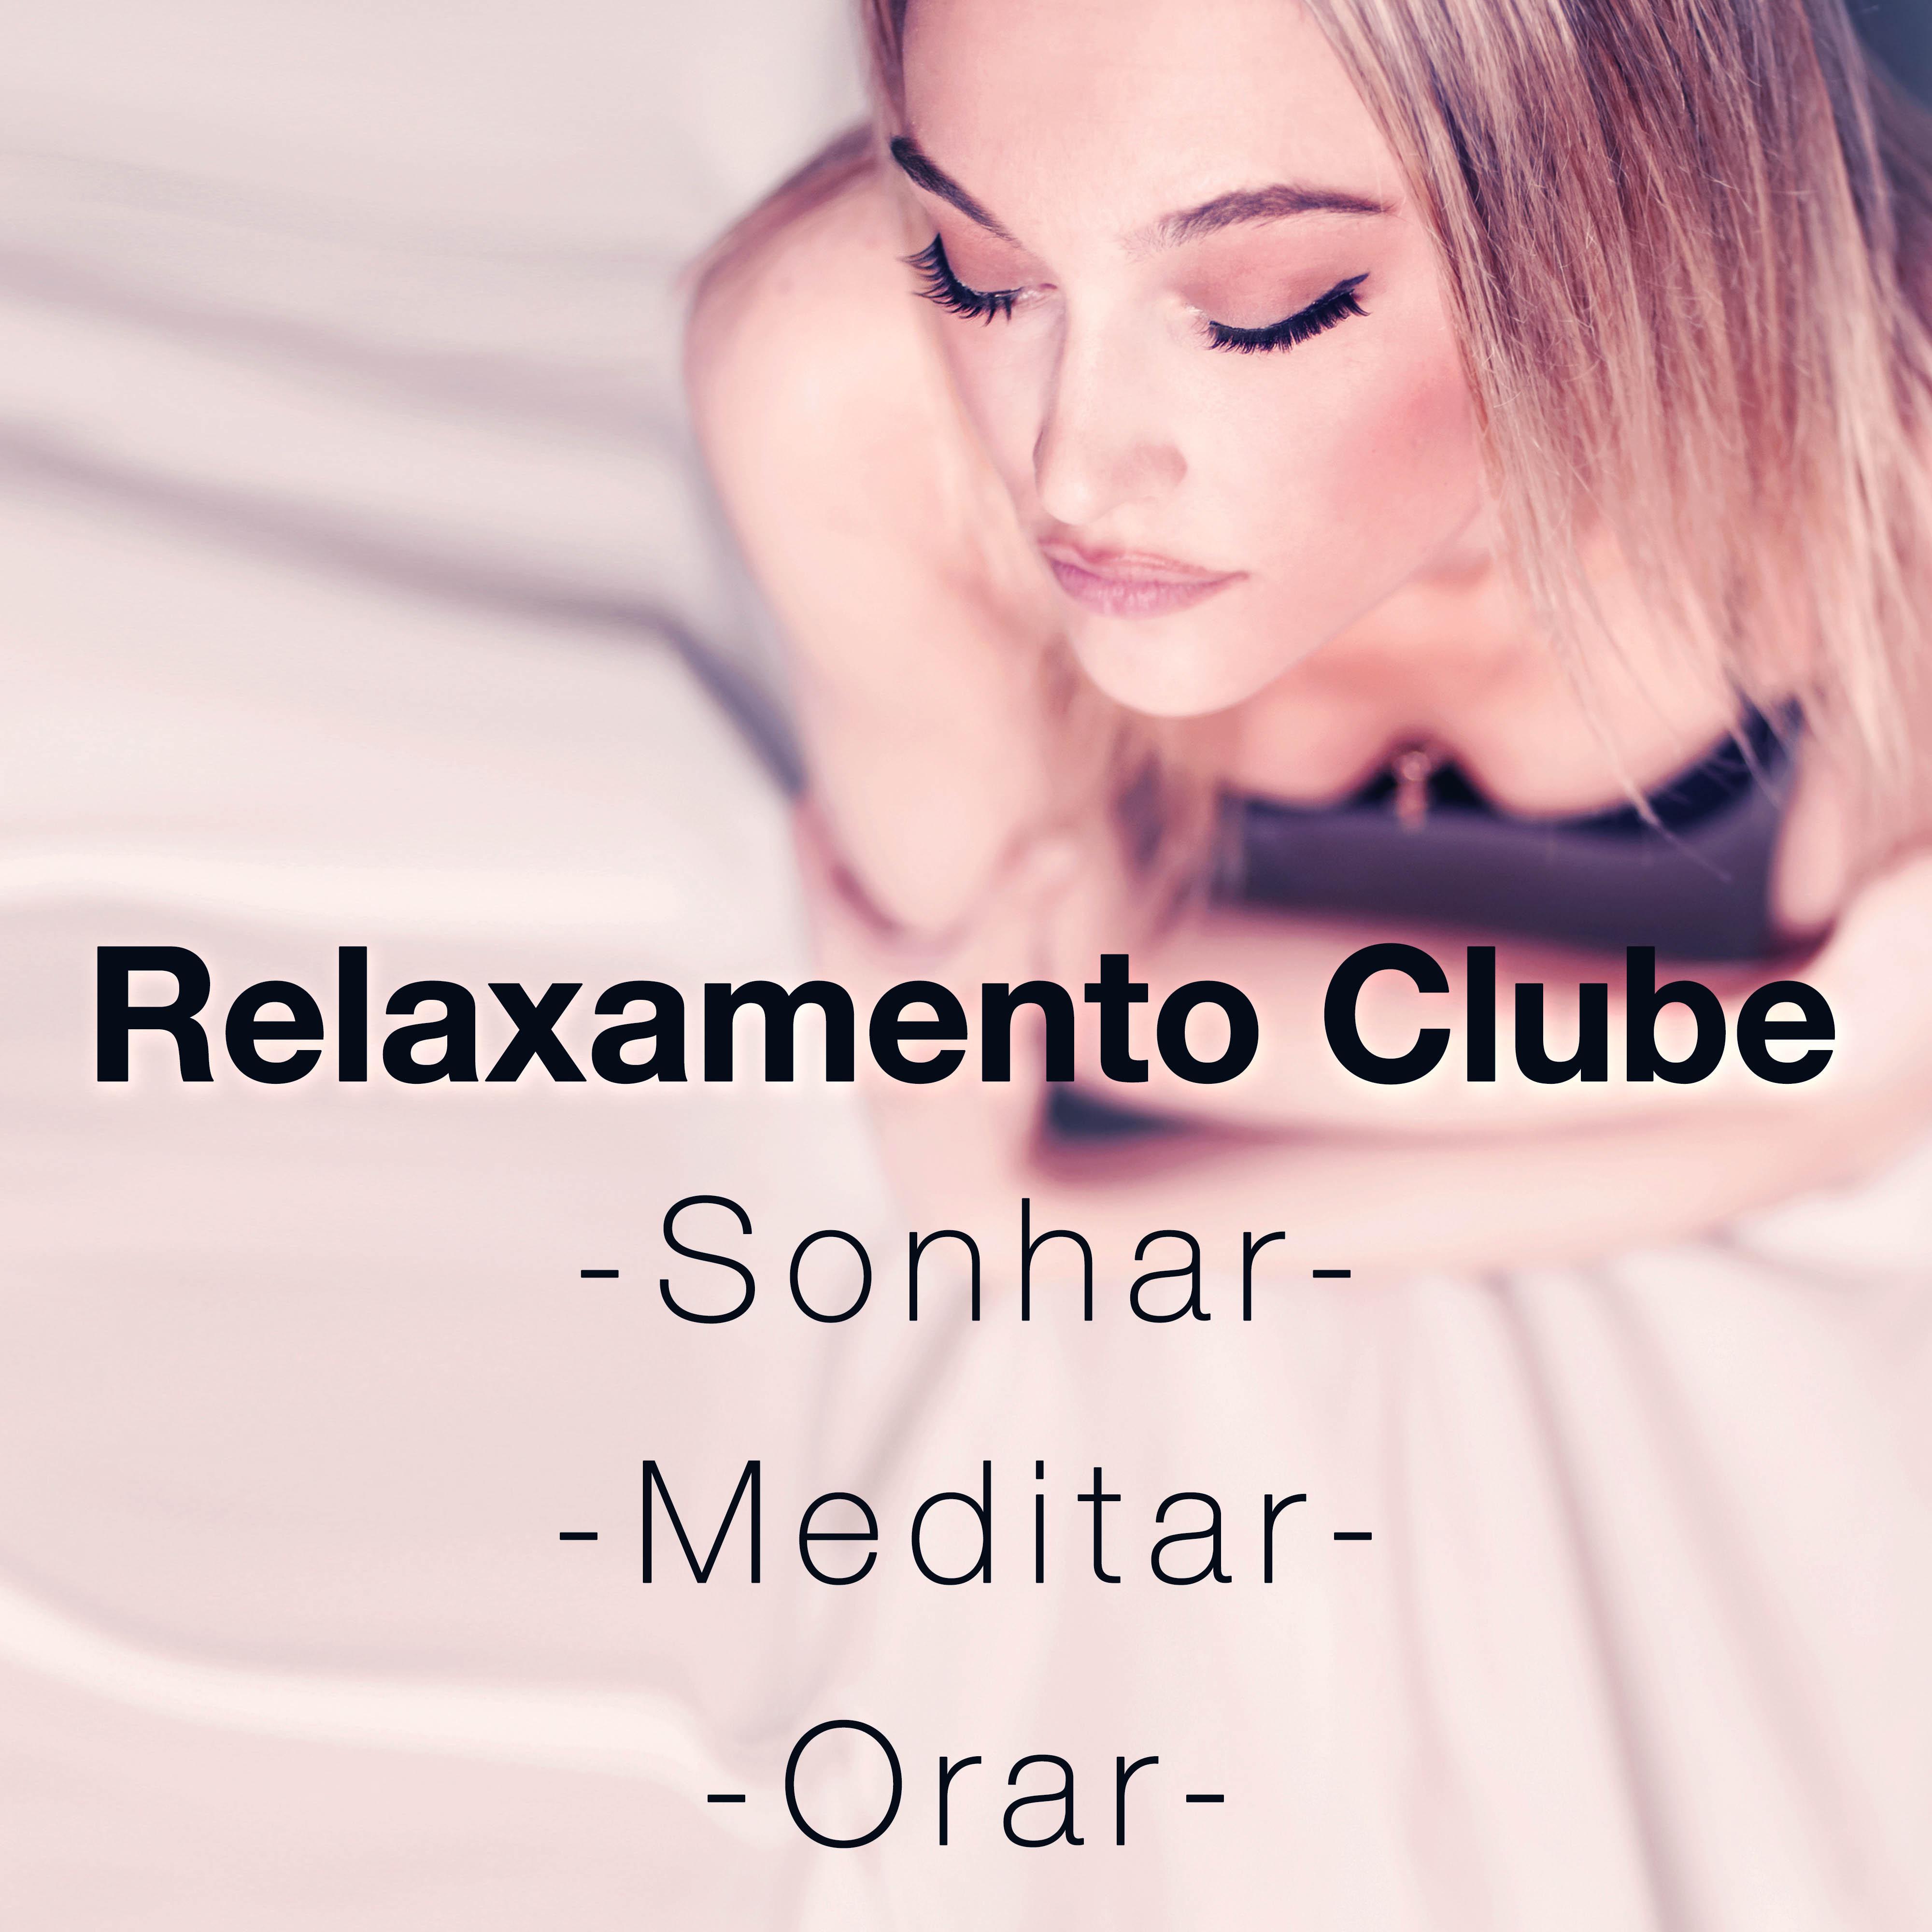 Relaxamento Clube  Mu sica para Sonhar, Meditar, Orar y  para a Paz Interior